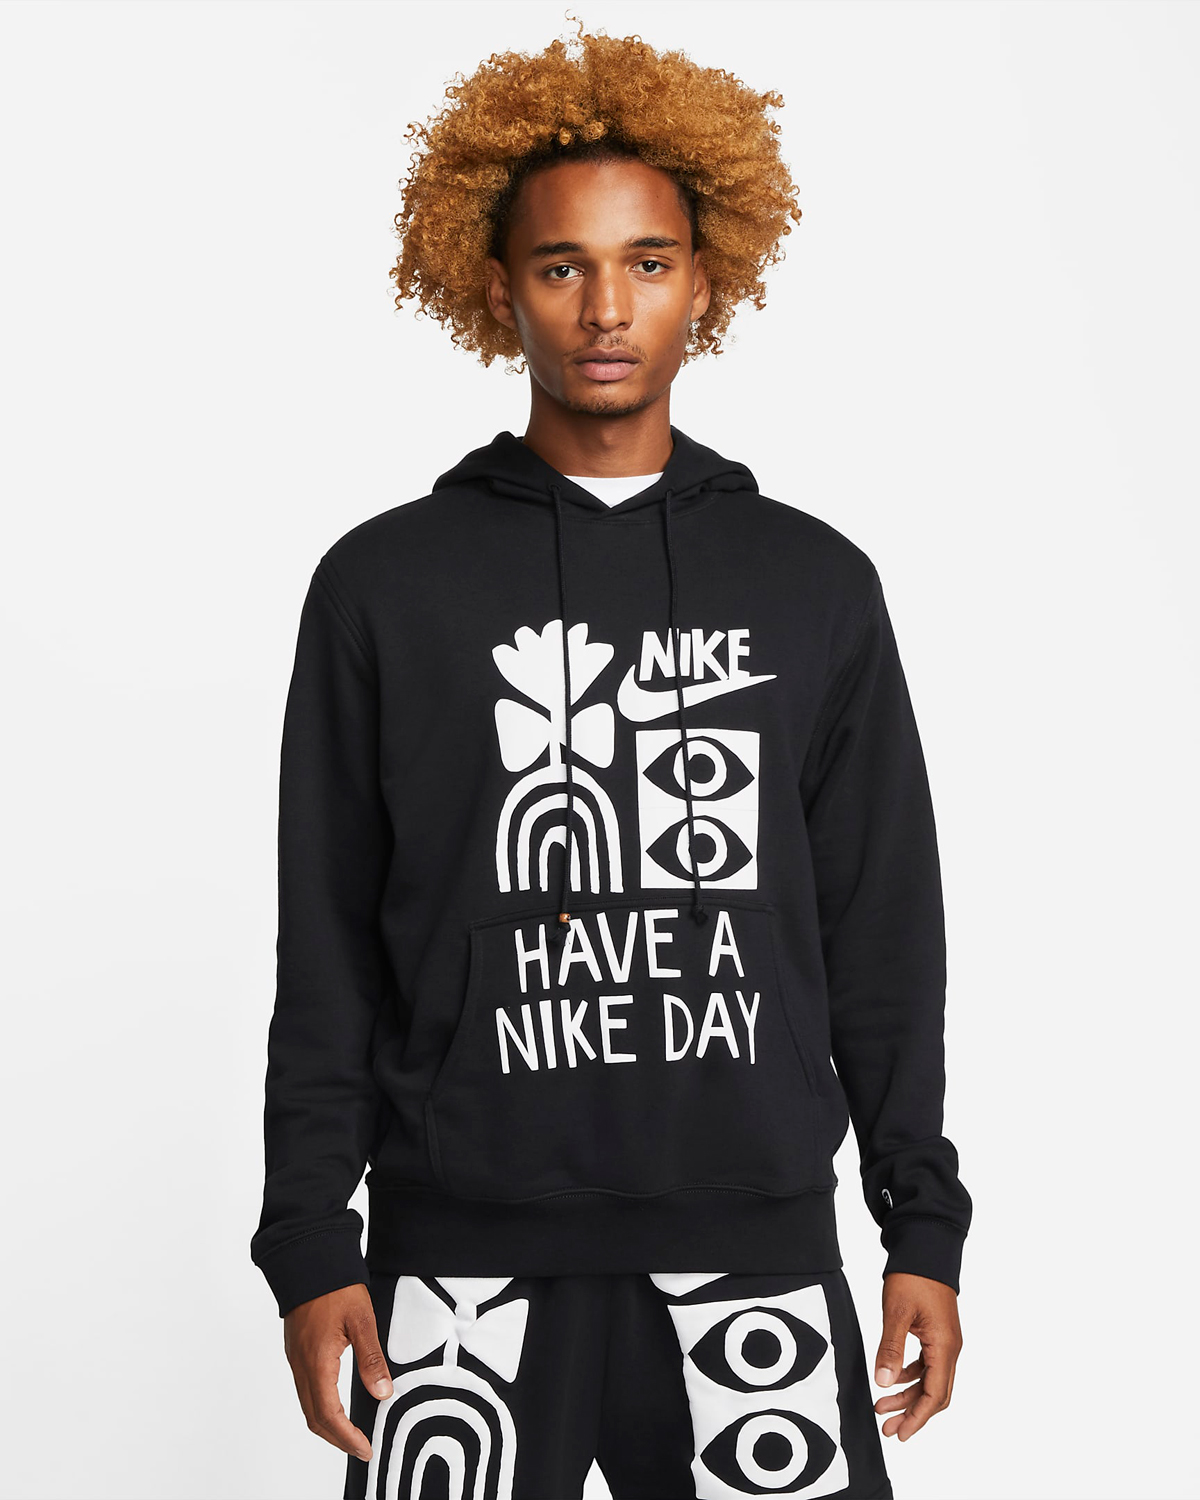 nike-sportswear-have-a-nike-day-hoodie-black-white